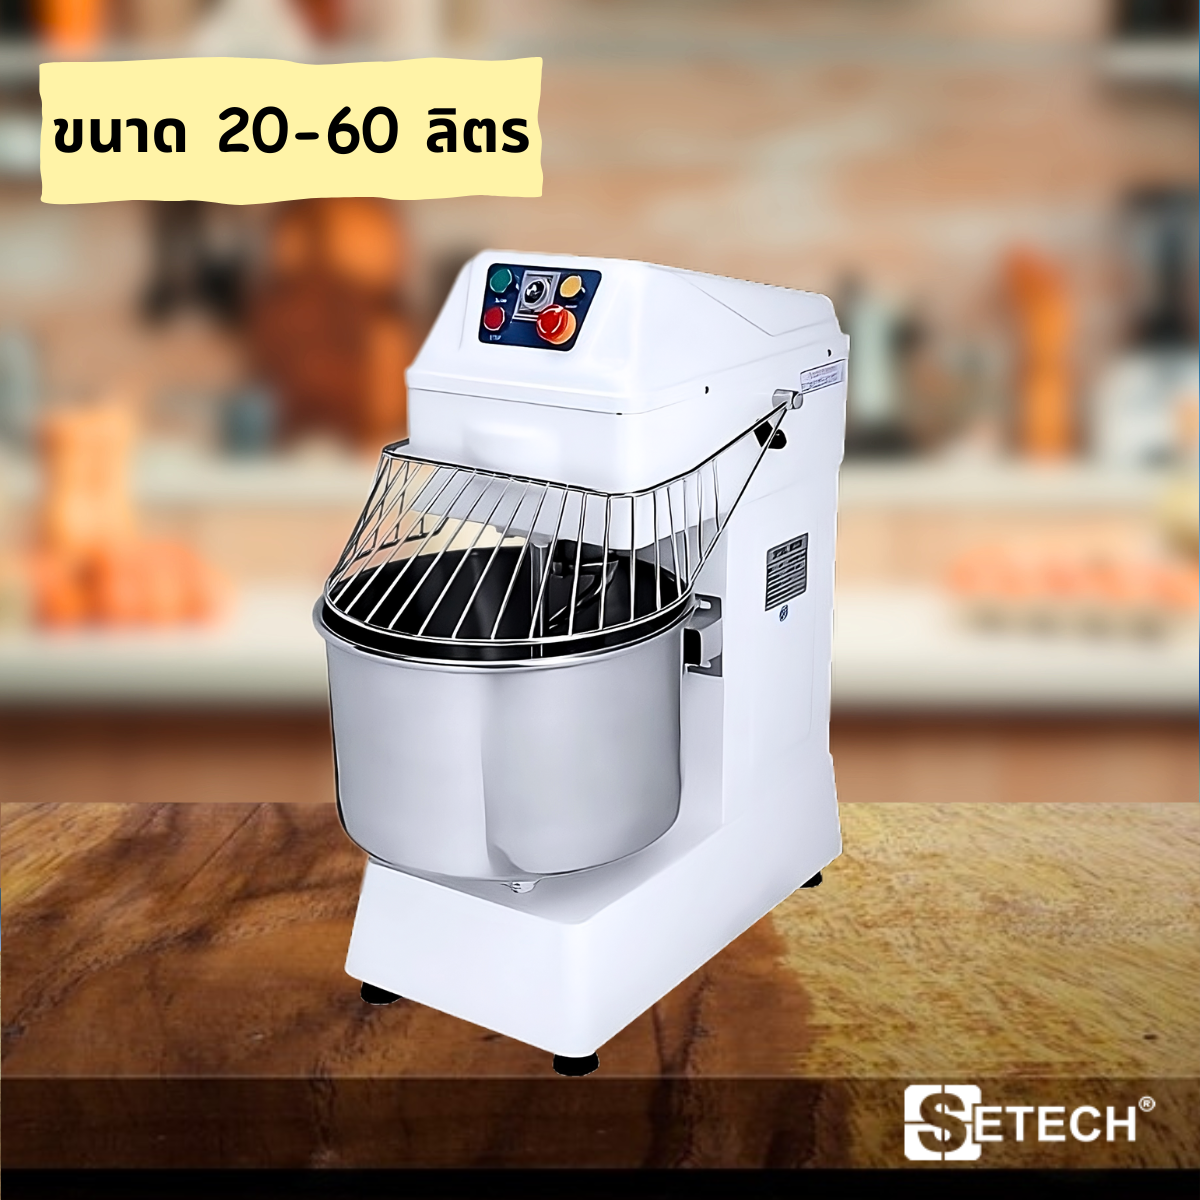 Dough kneading machine SETECH-MM20 MM20